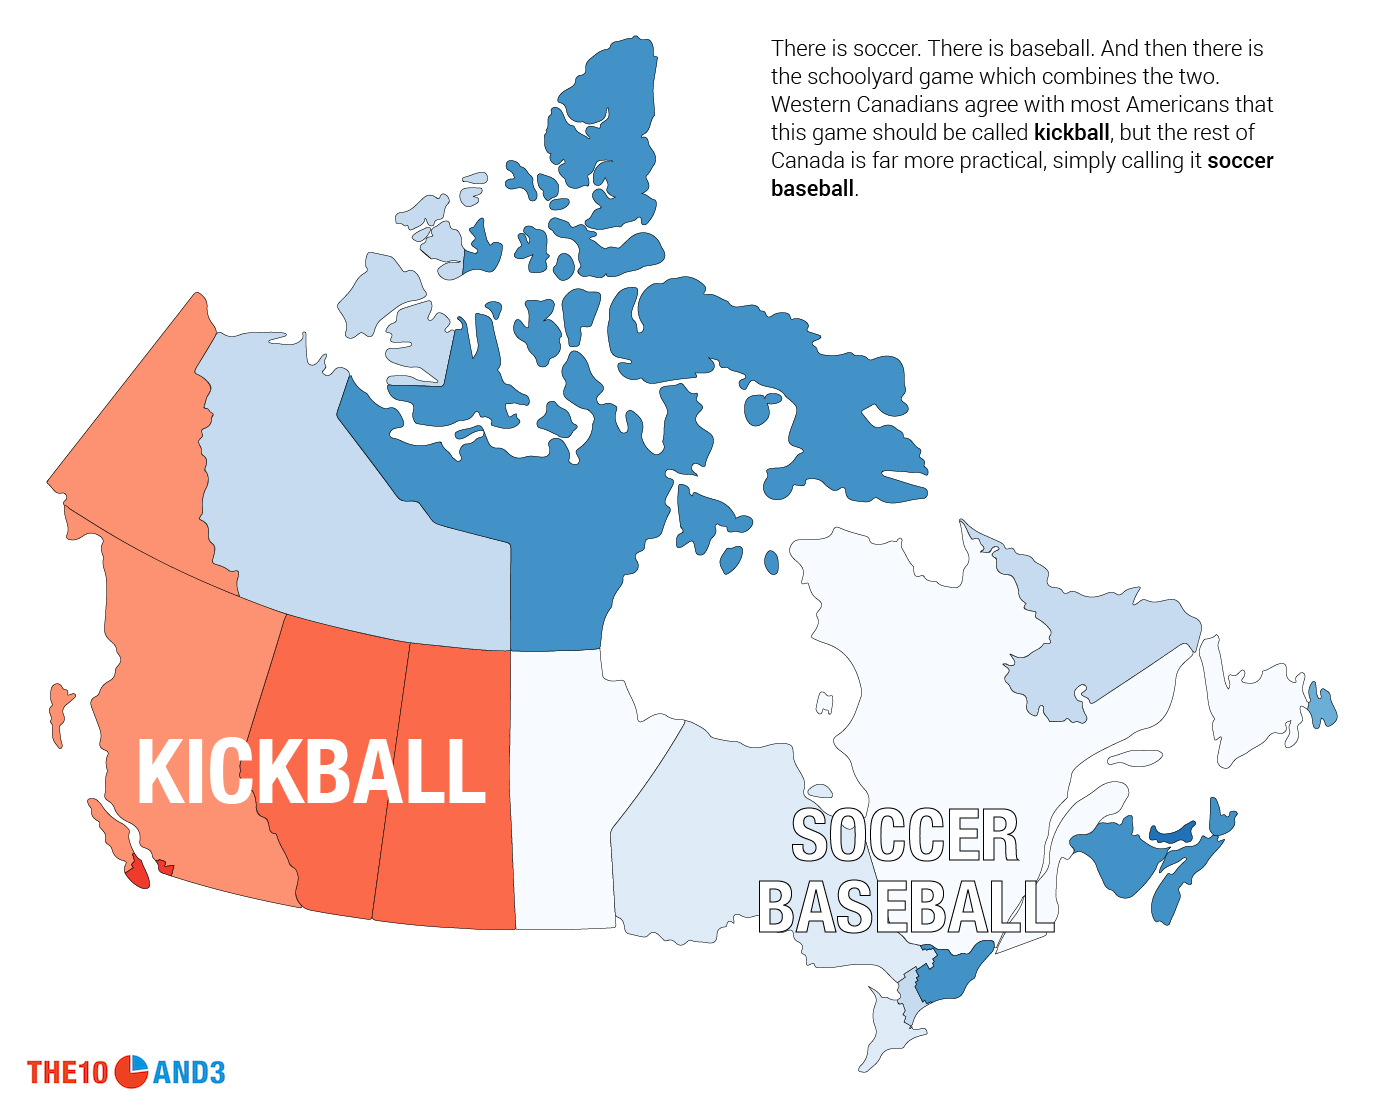 Kickball vs. Soccer Baseball